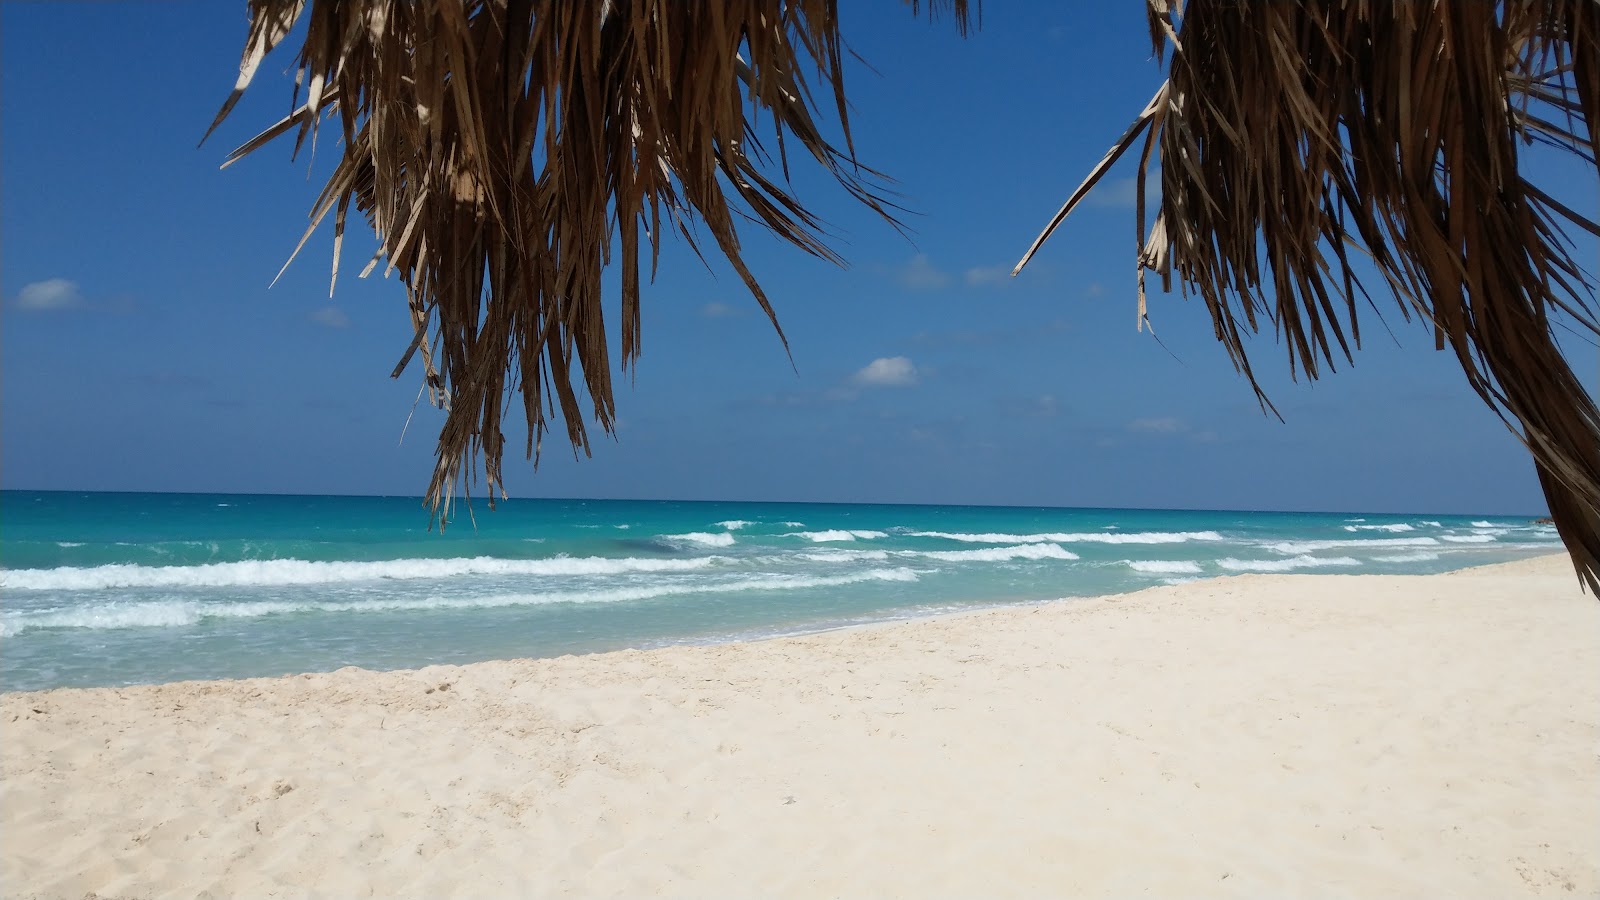 Foto af El-Rowad Beach - populært sted blandt afslapningskendere